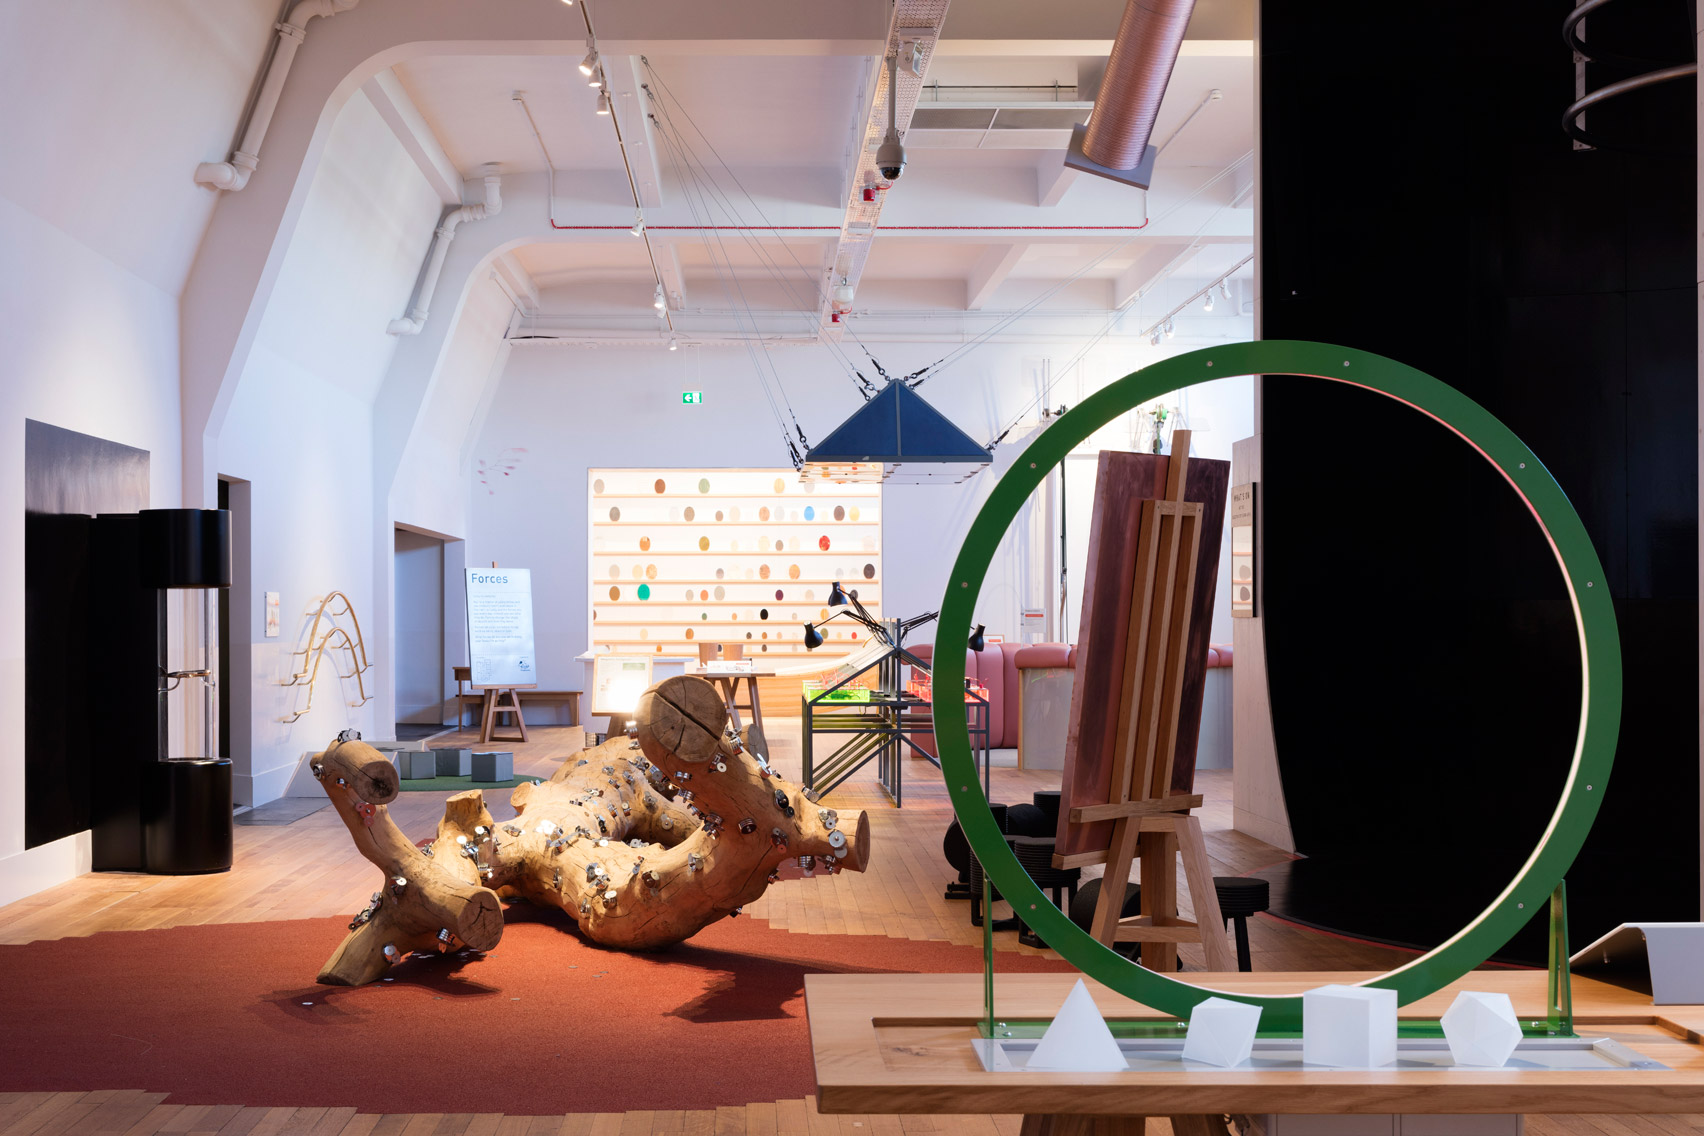 wonderlab-exhibition-interiors-design-science-museum-london-uk_dezeen_1704_col_9